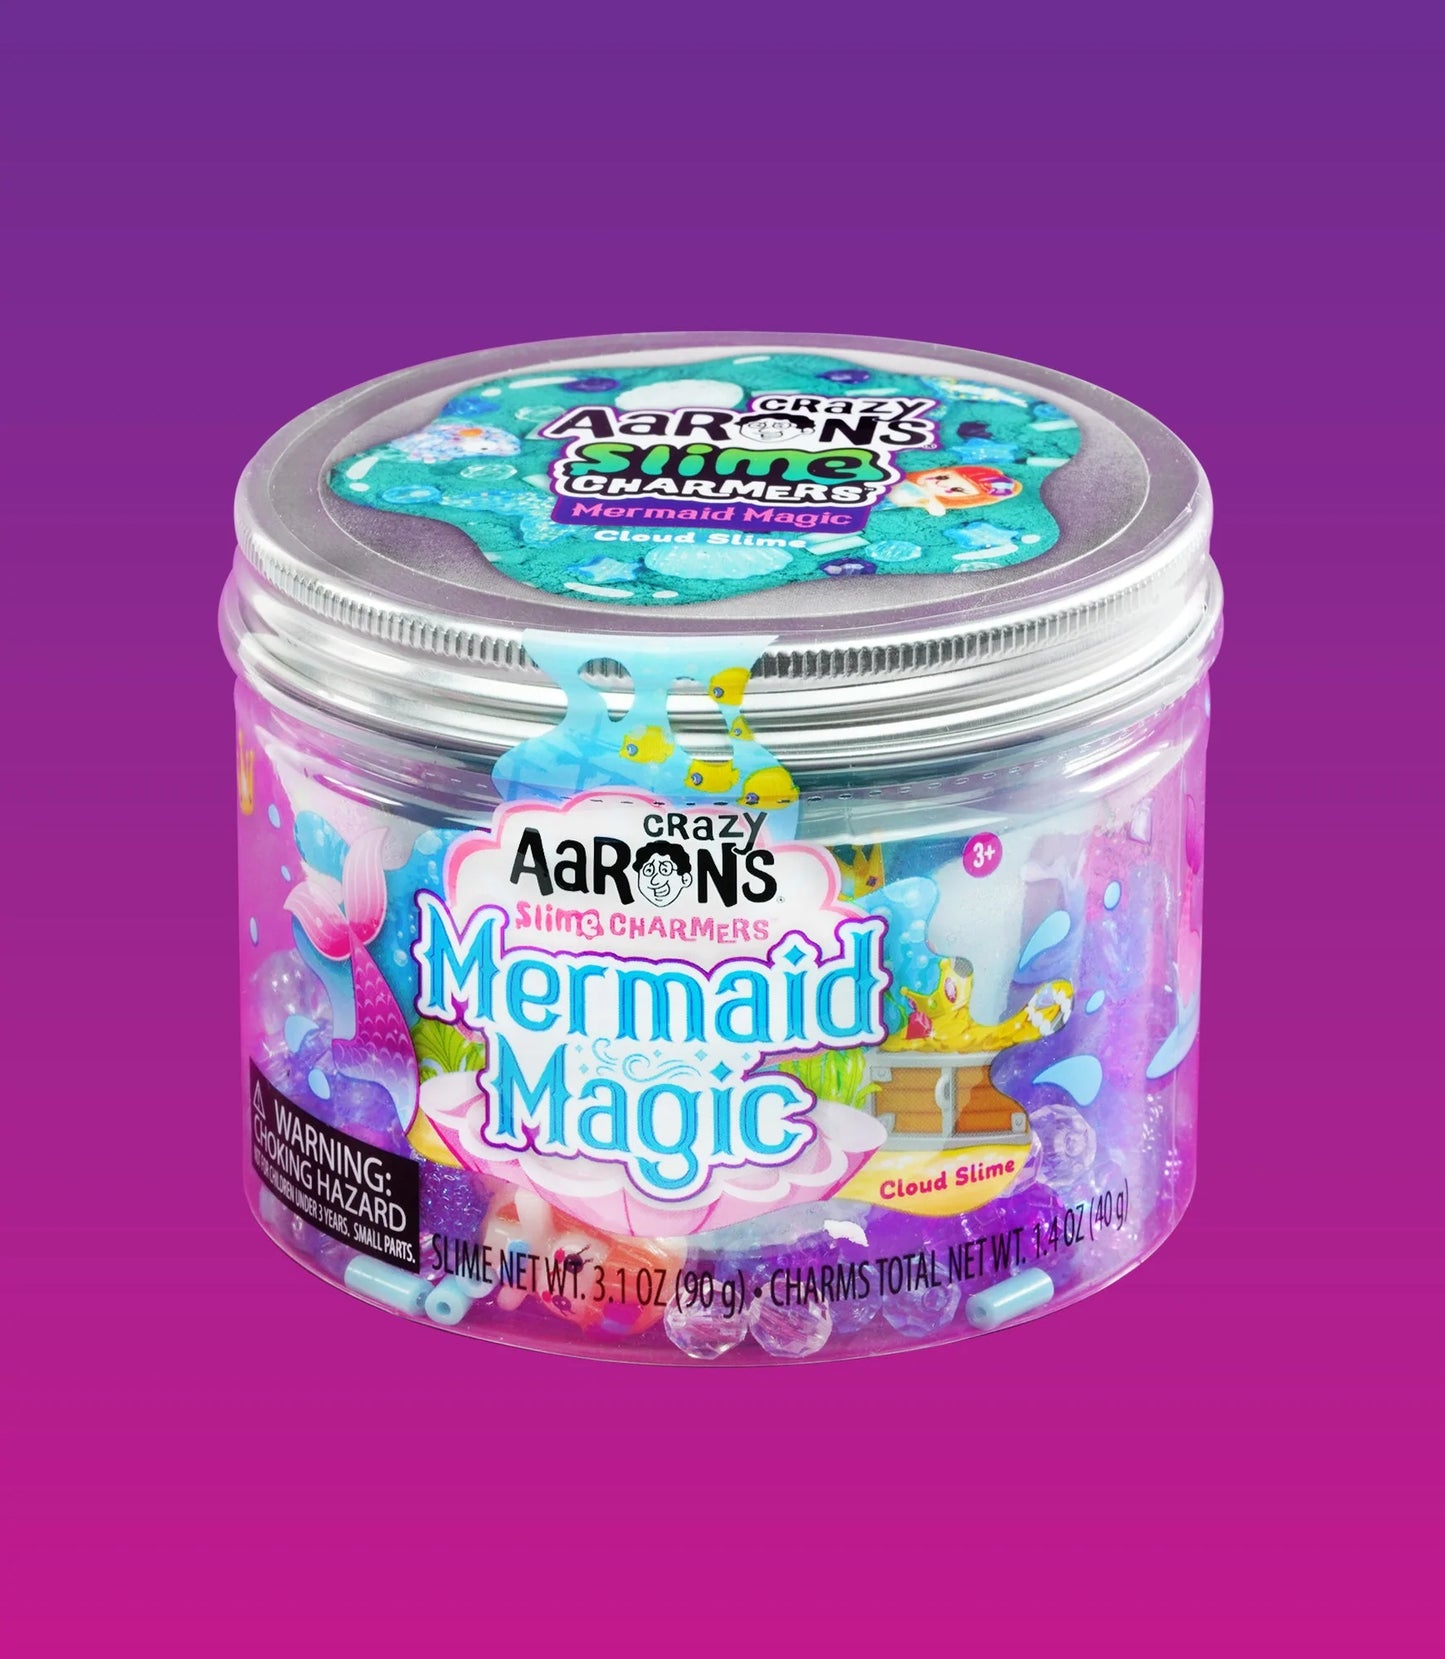 Mermaid Magic - Crazy Aaron's® Slime Charmers™